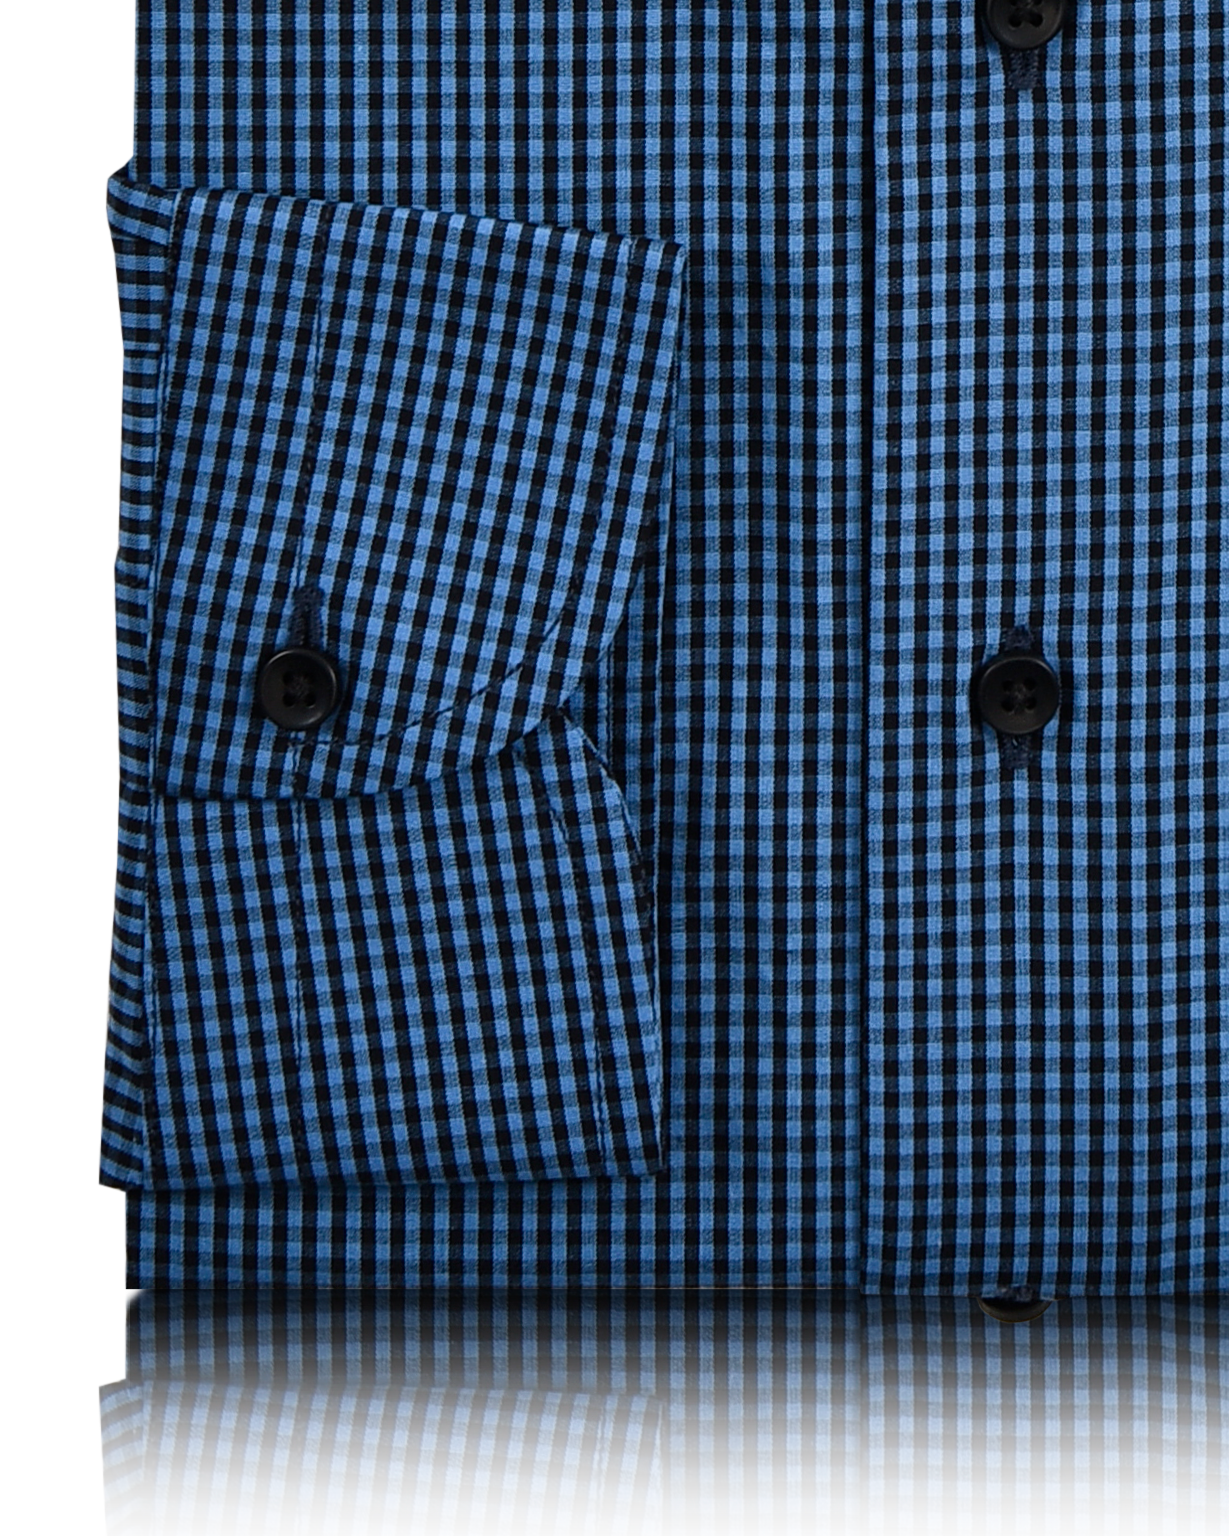 Black and Blue Micro Gingham Checks Shirt